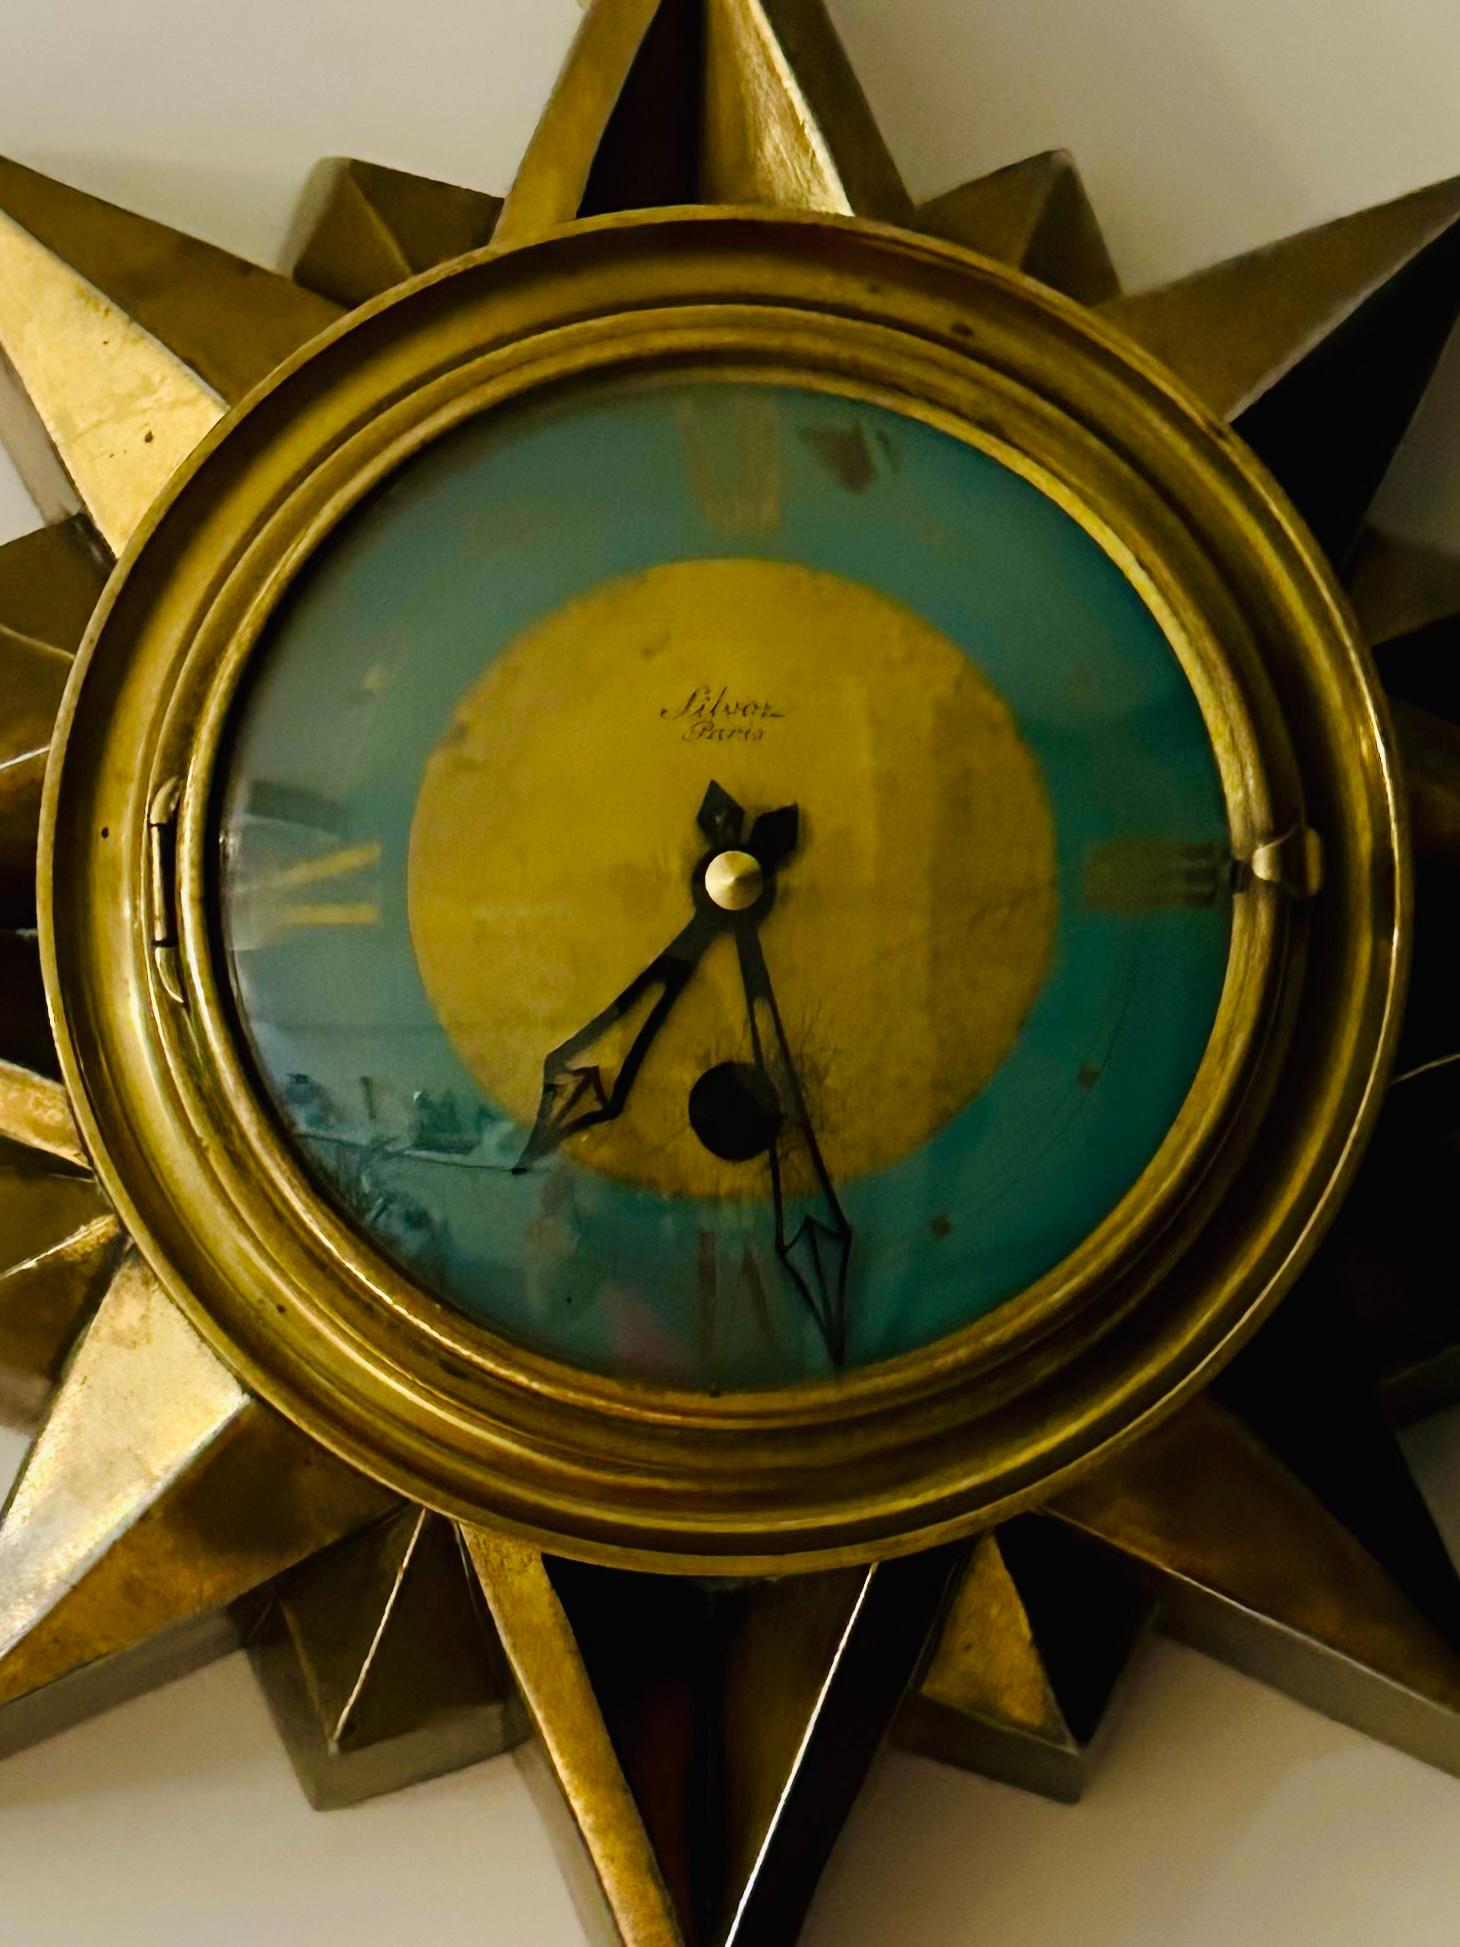 1930s French Art Deco 'Cartel Silvoz Paris' Sunburst Brass Wall Hanging Clock For Sale 5